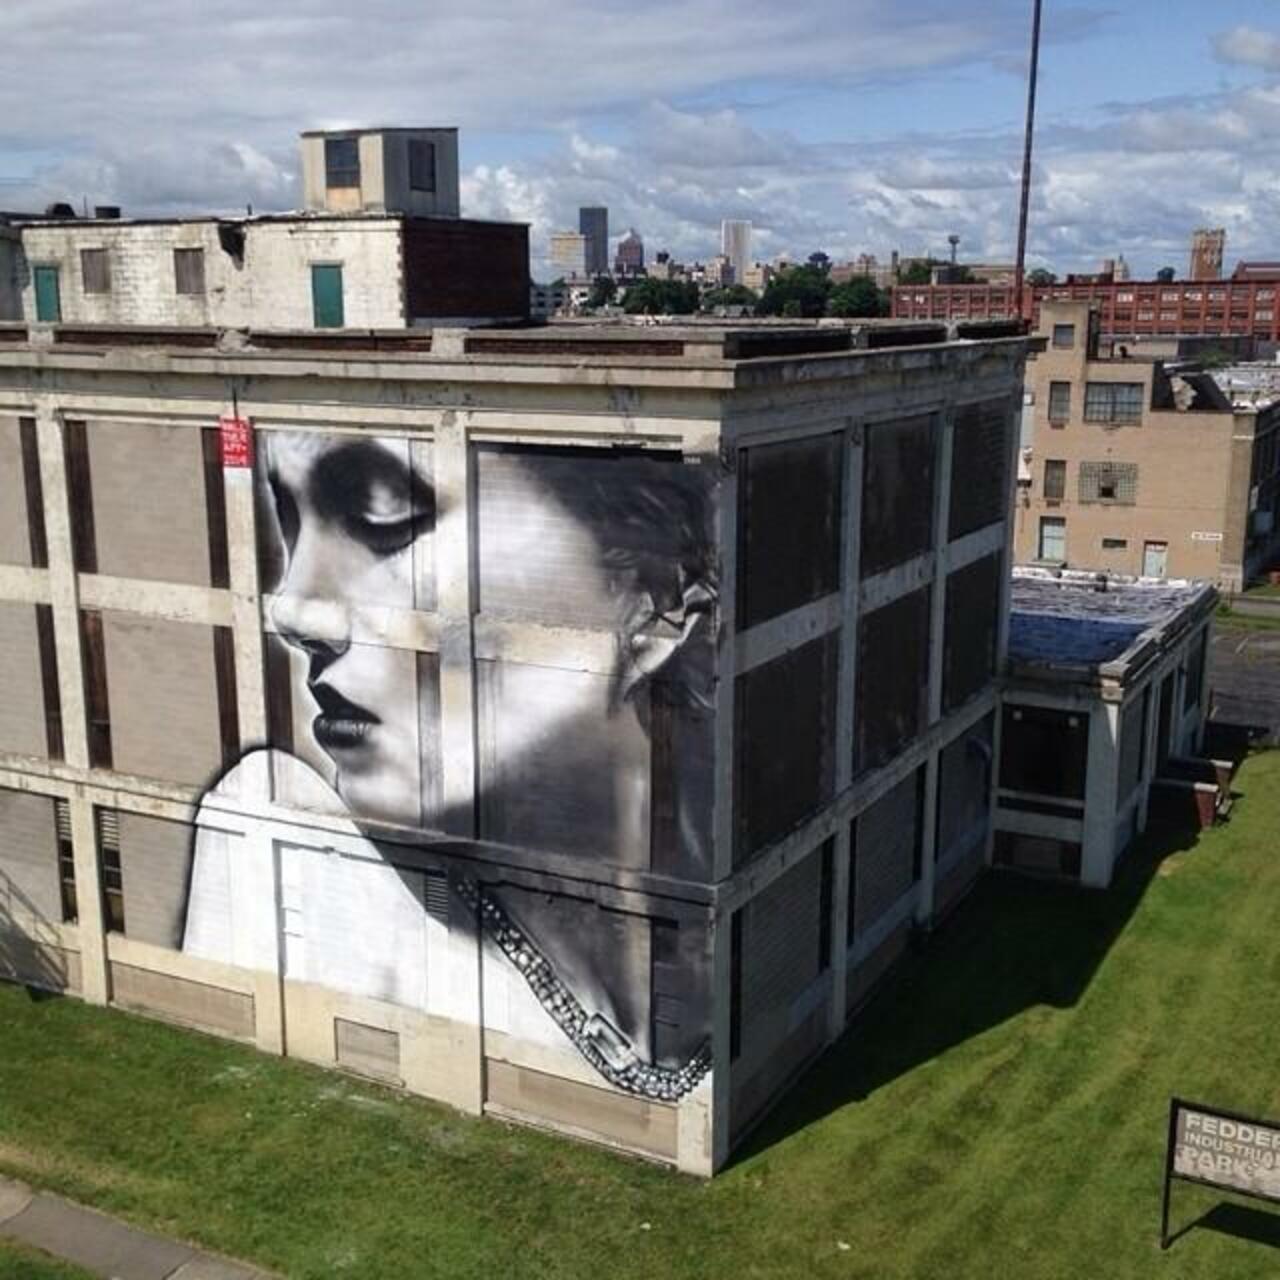 RT @designopinion: Artist Omen514 new large scale #StreetArt mural located in Rochester, NYC #art #graffiti #mural http://t.co/bDCQKojoSf